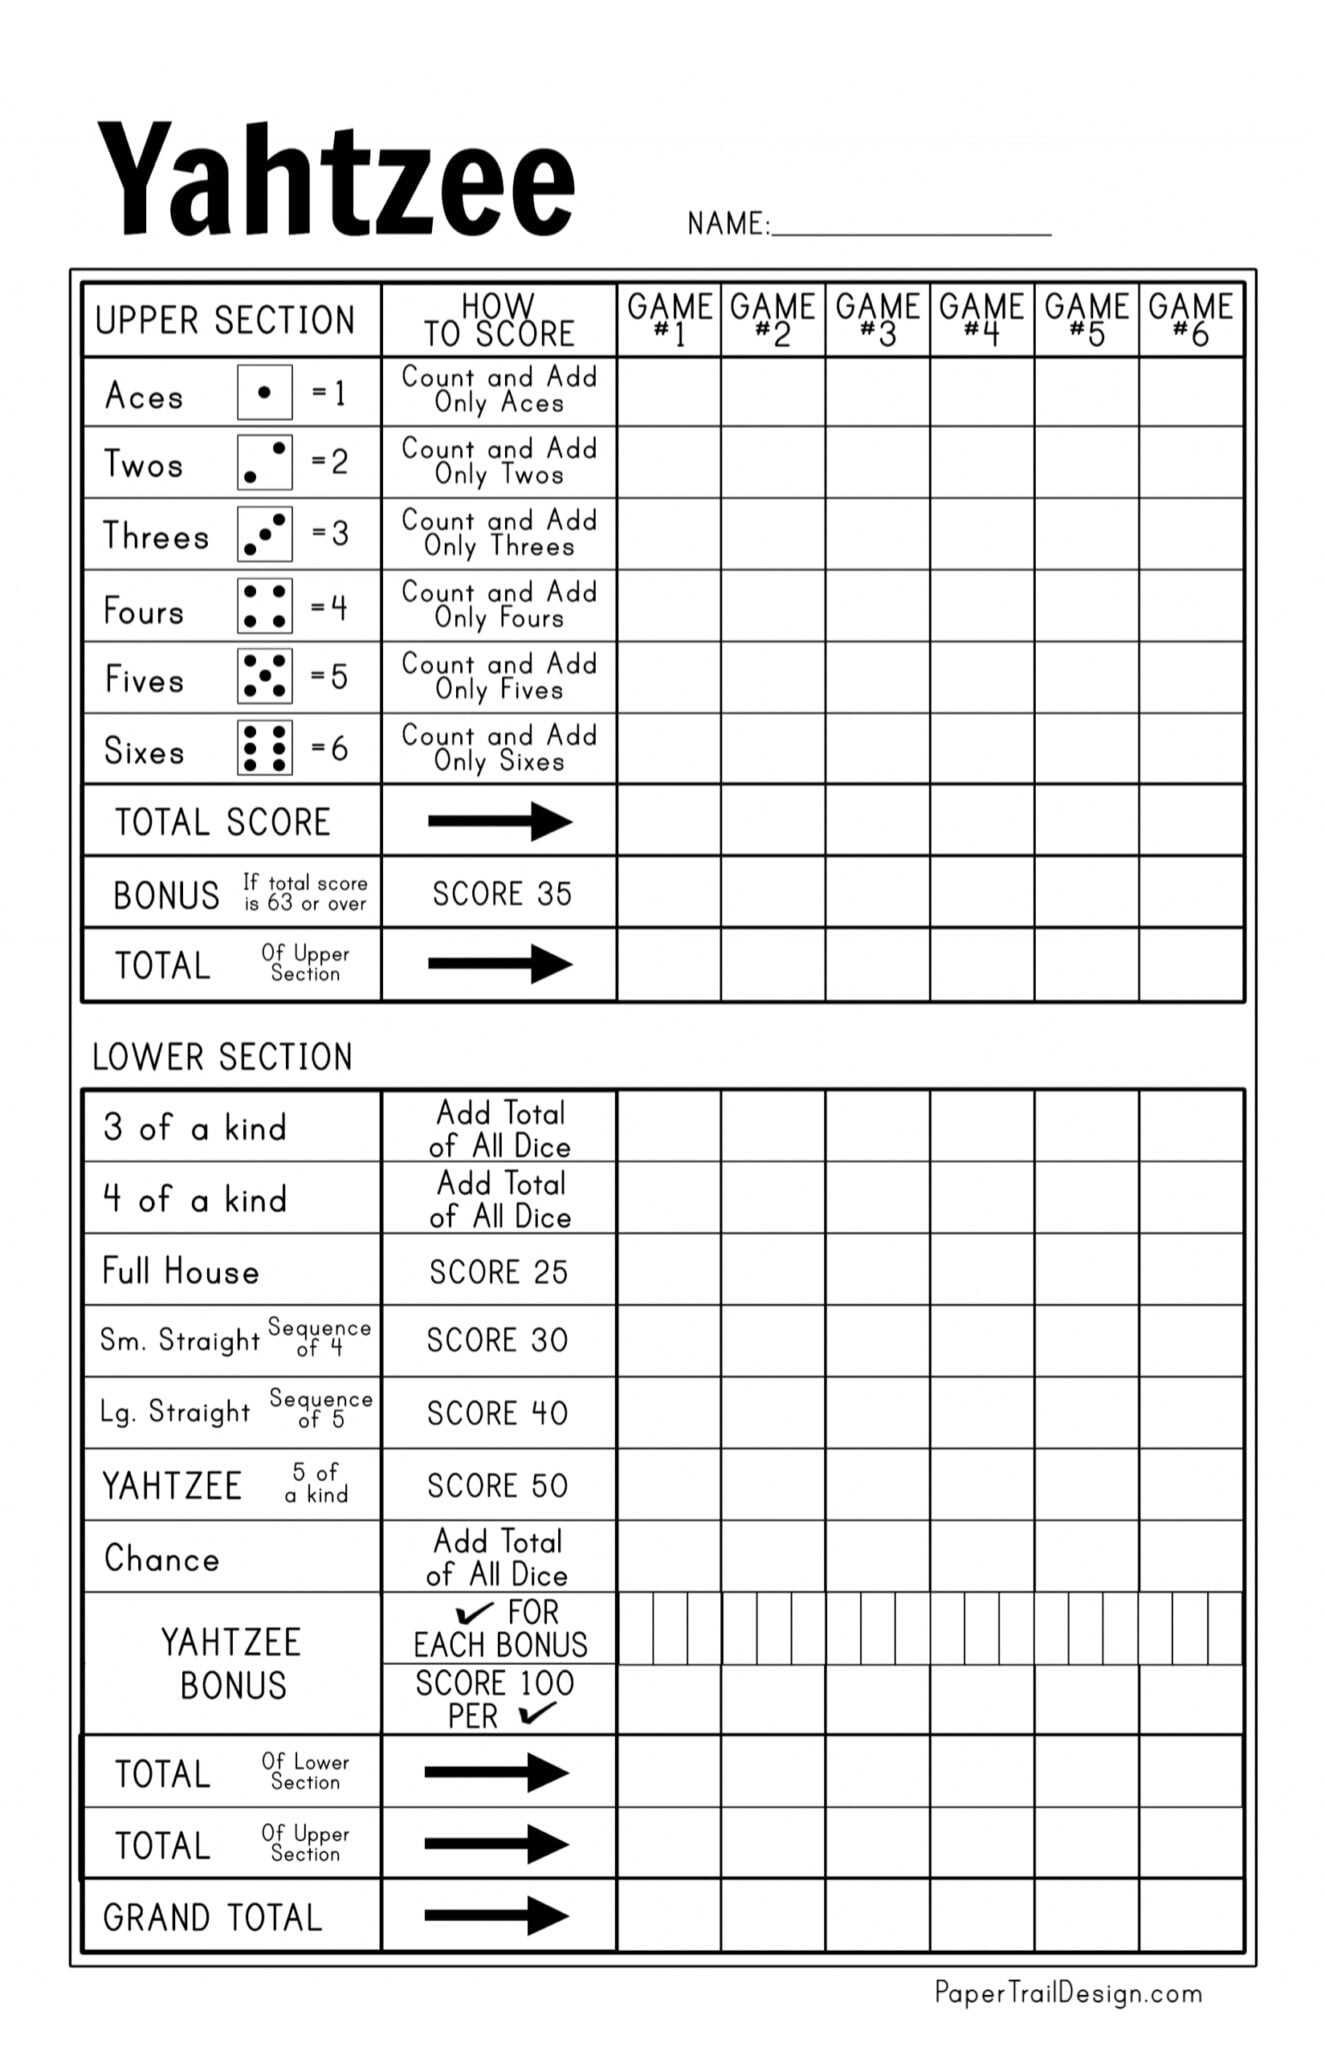 Free Printable Yahtzee Score Card Paper Trail Design - Yahtzee Score Sheets